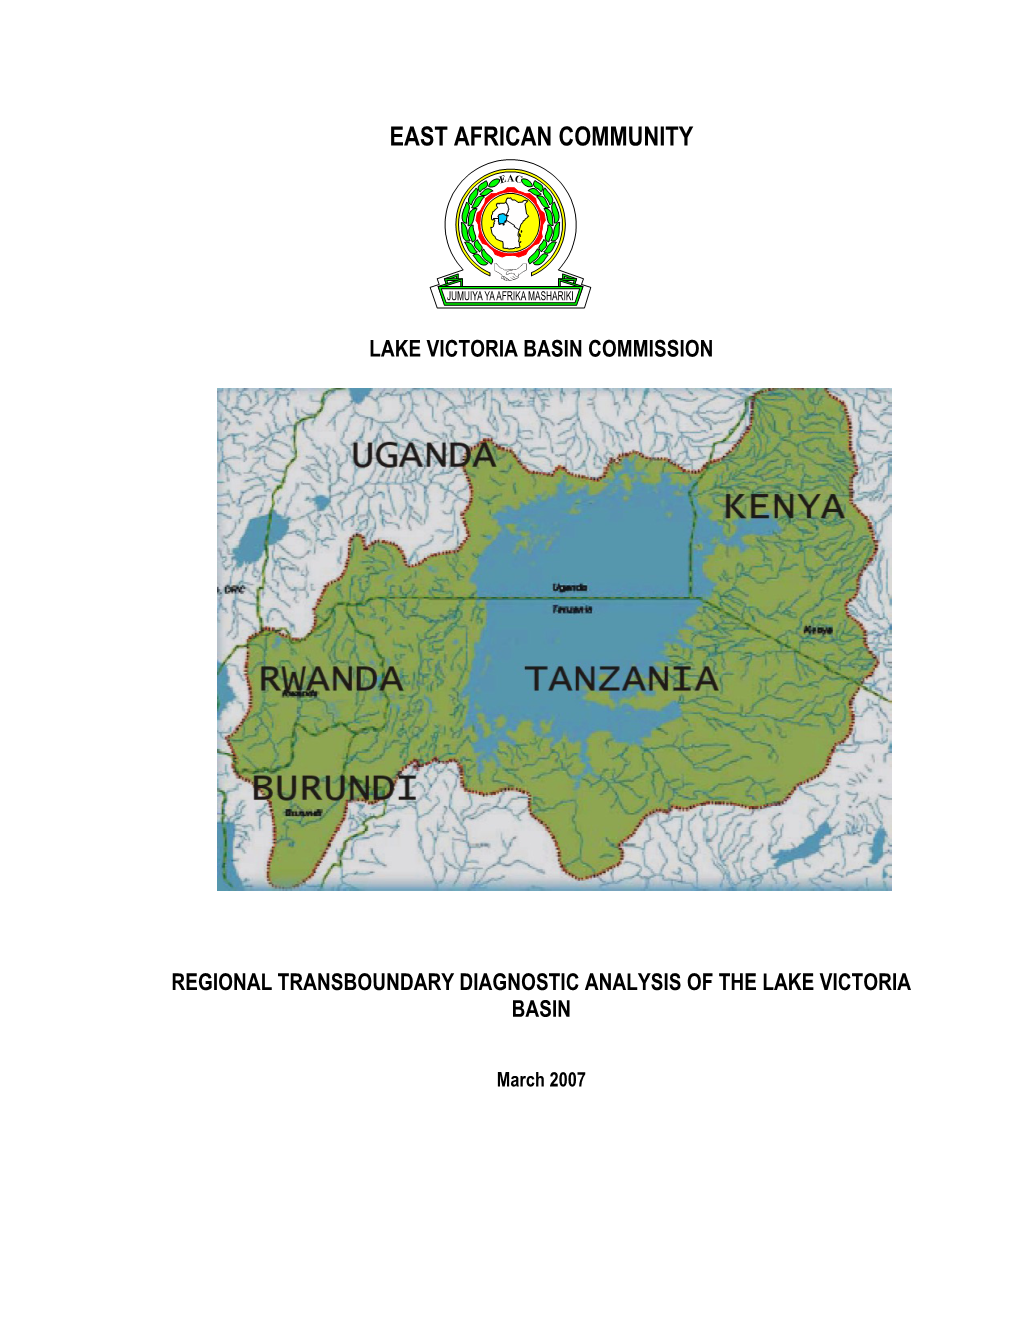 Regional Transboundary Diagnostic Analysis of the Lake Victoria Basin